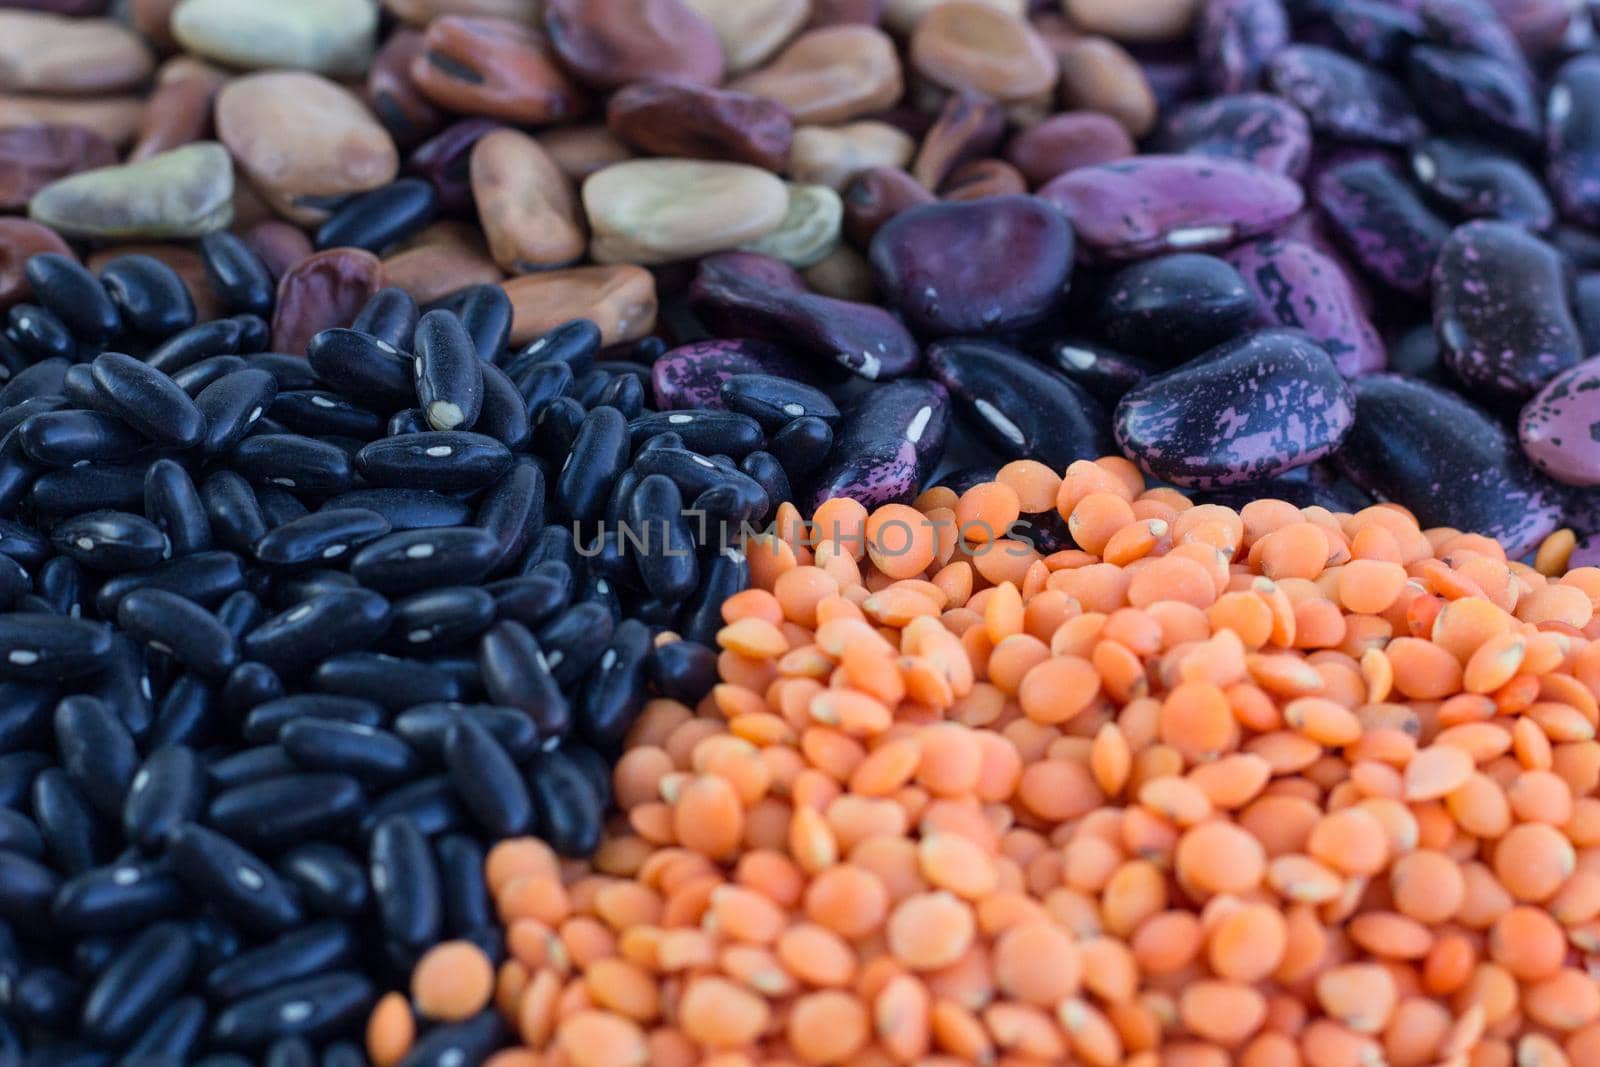 Multicolored background of healthy organic vegan vegetarian grain food bean lentils ingredients mix by VeraVerano